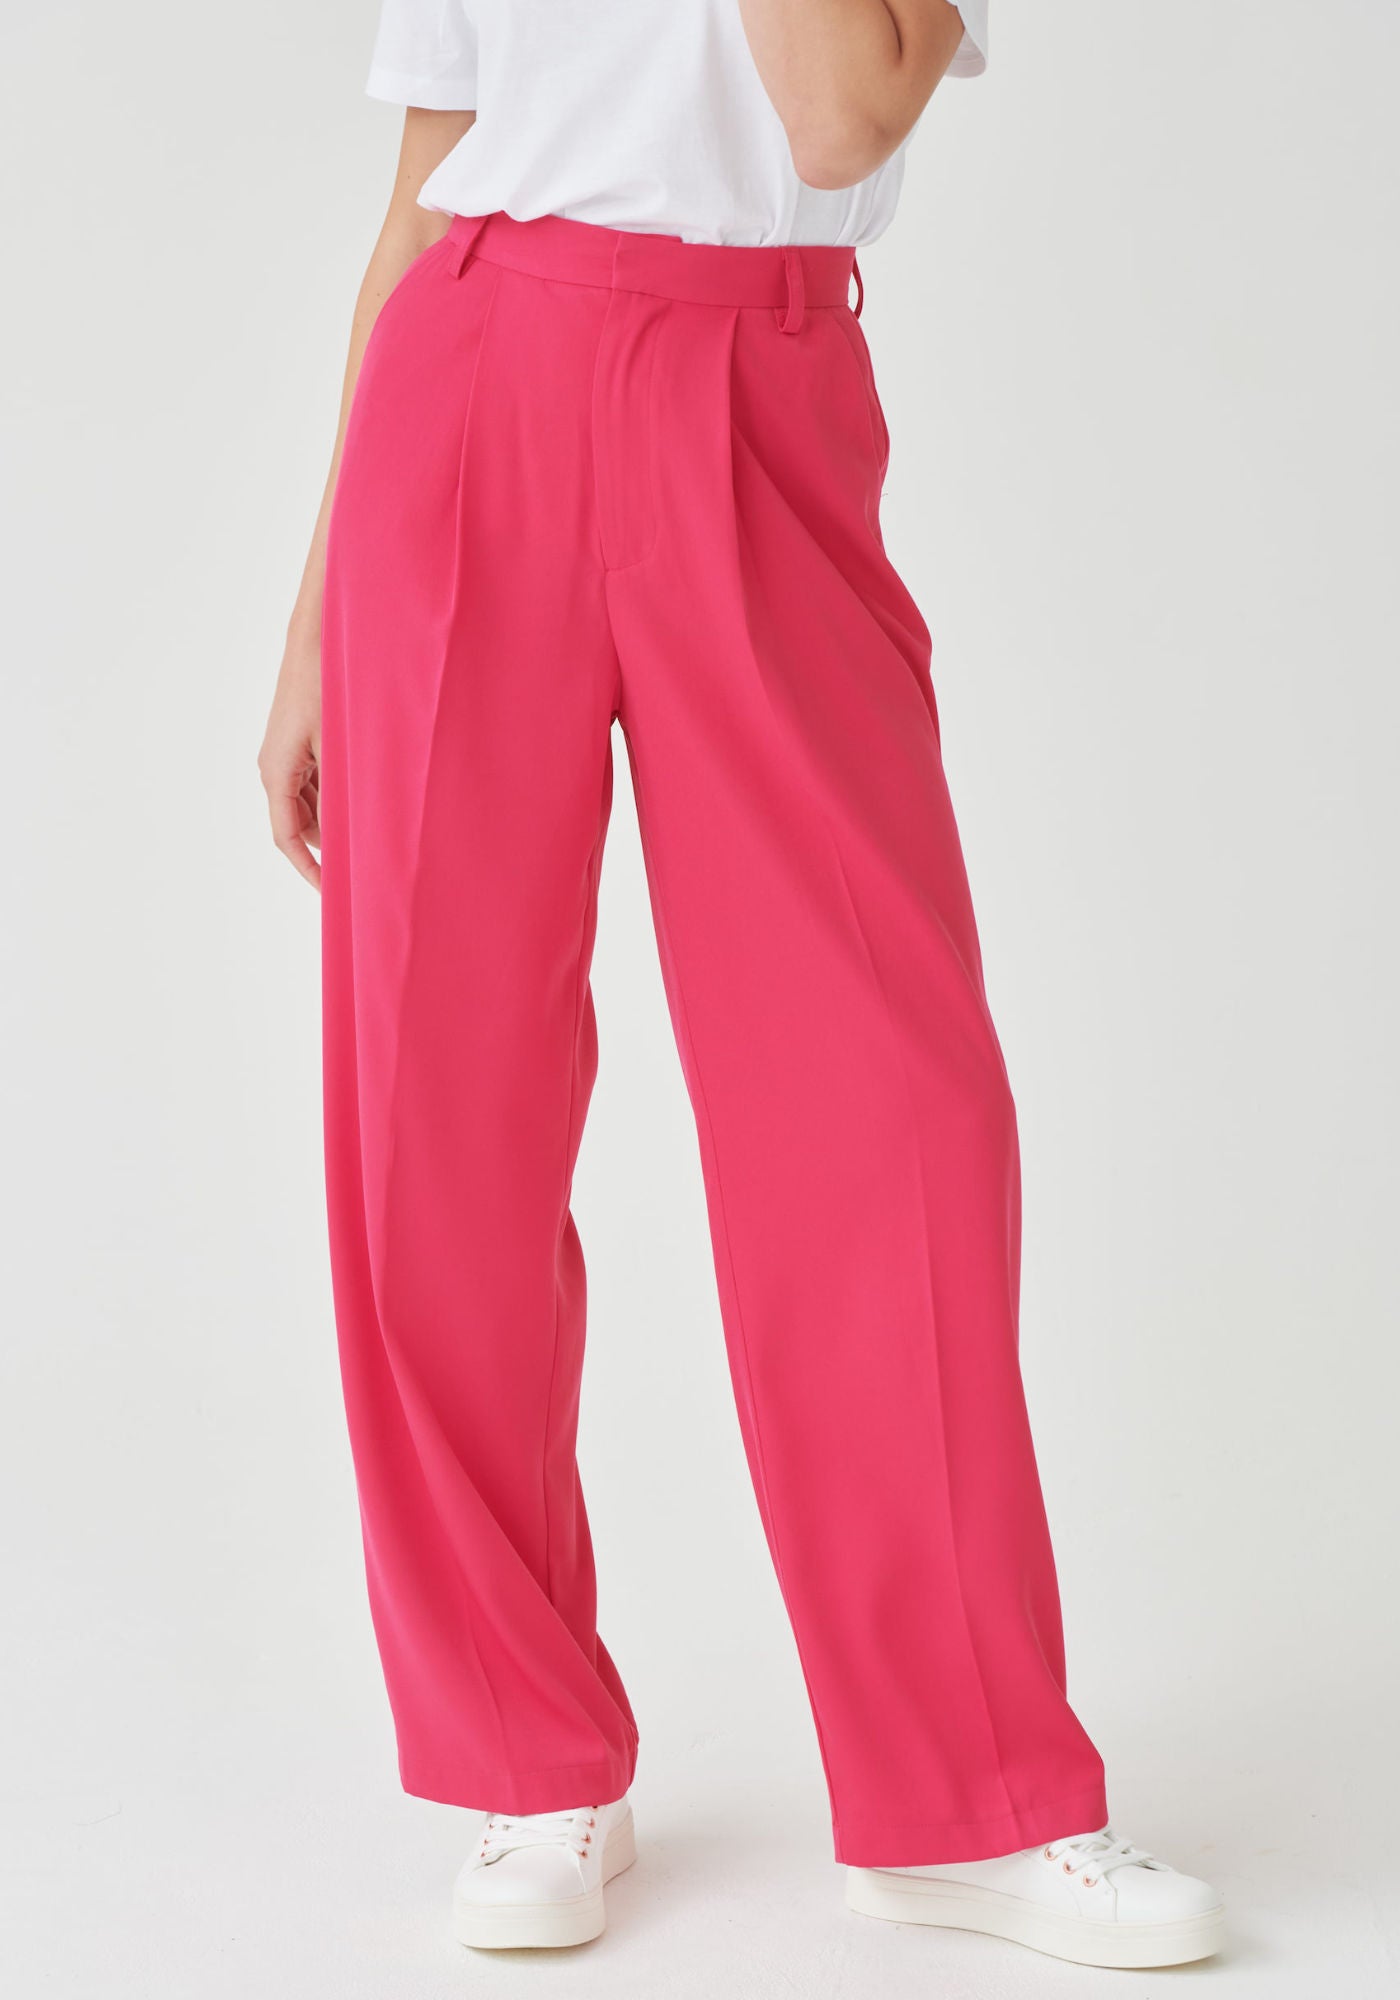 JAYLEY Pink Eco Leather Trousers - Womenswear from JAYLEY UK